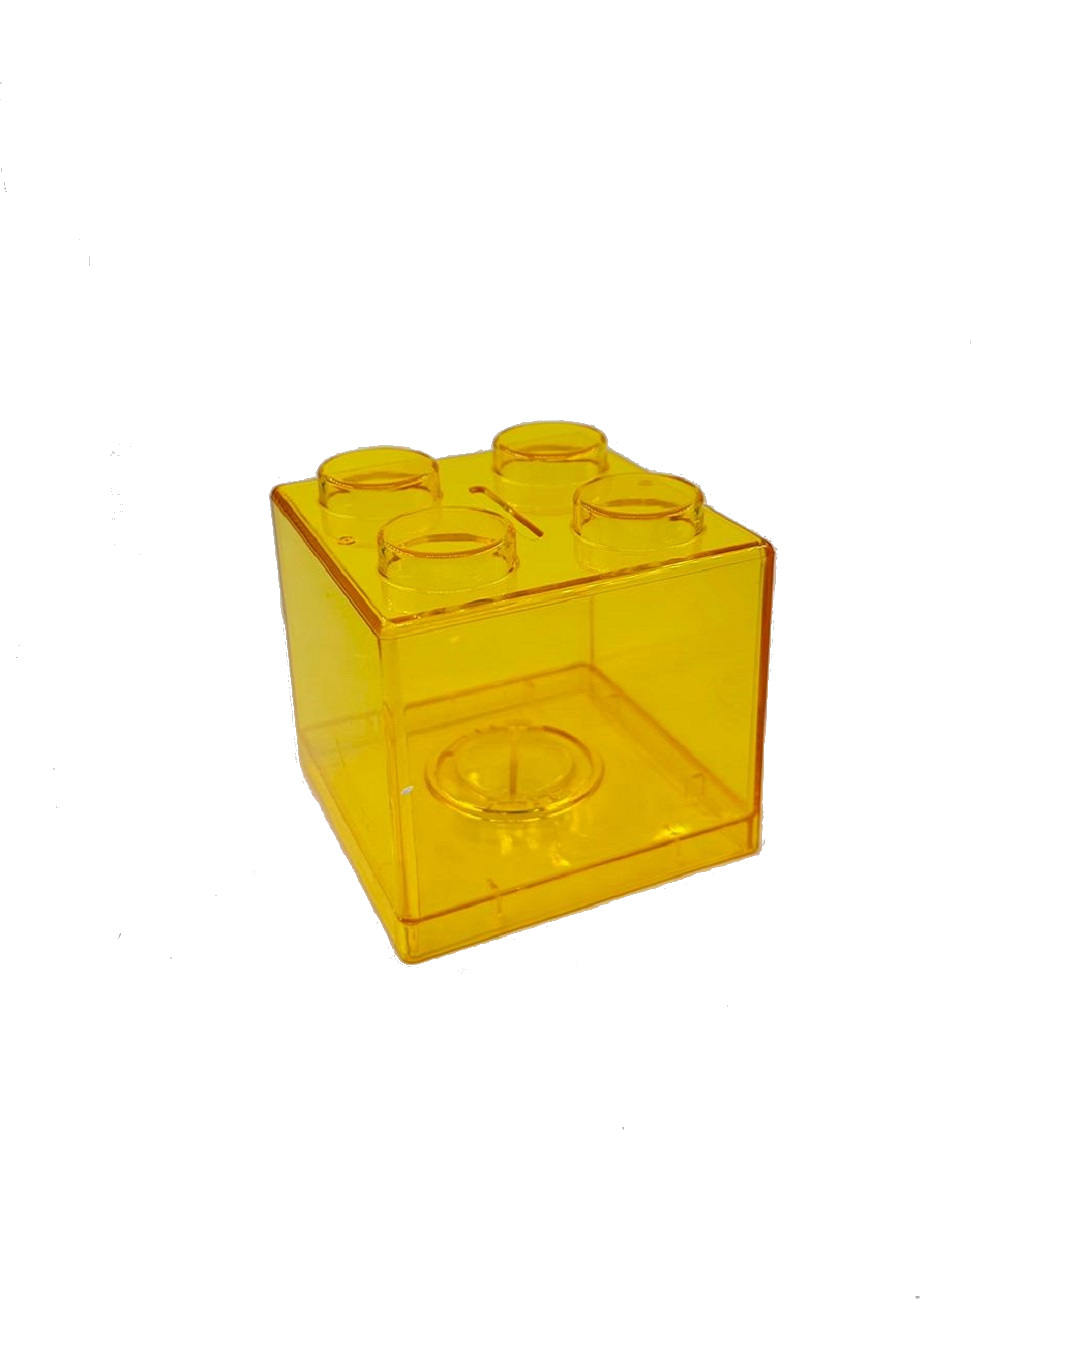 Yellow lego kids money box